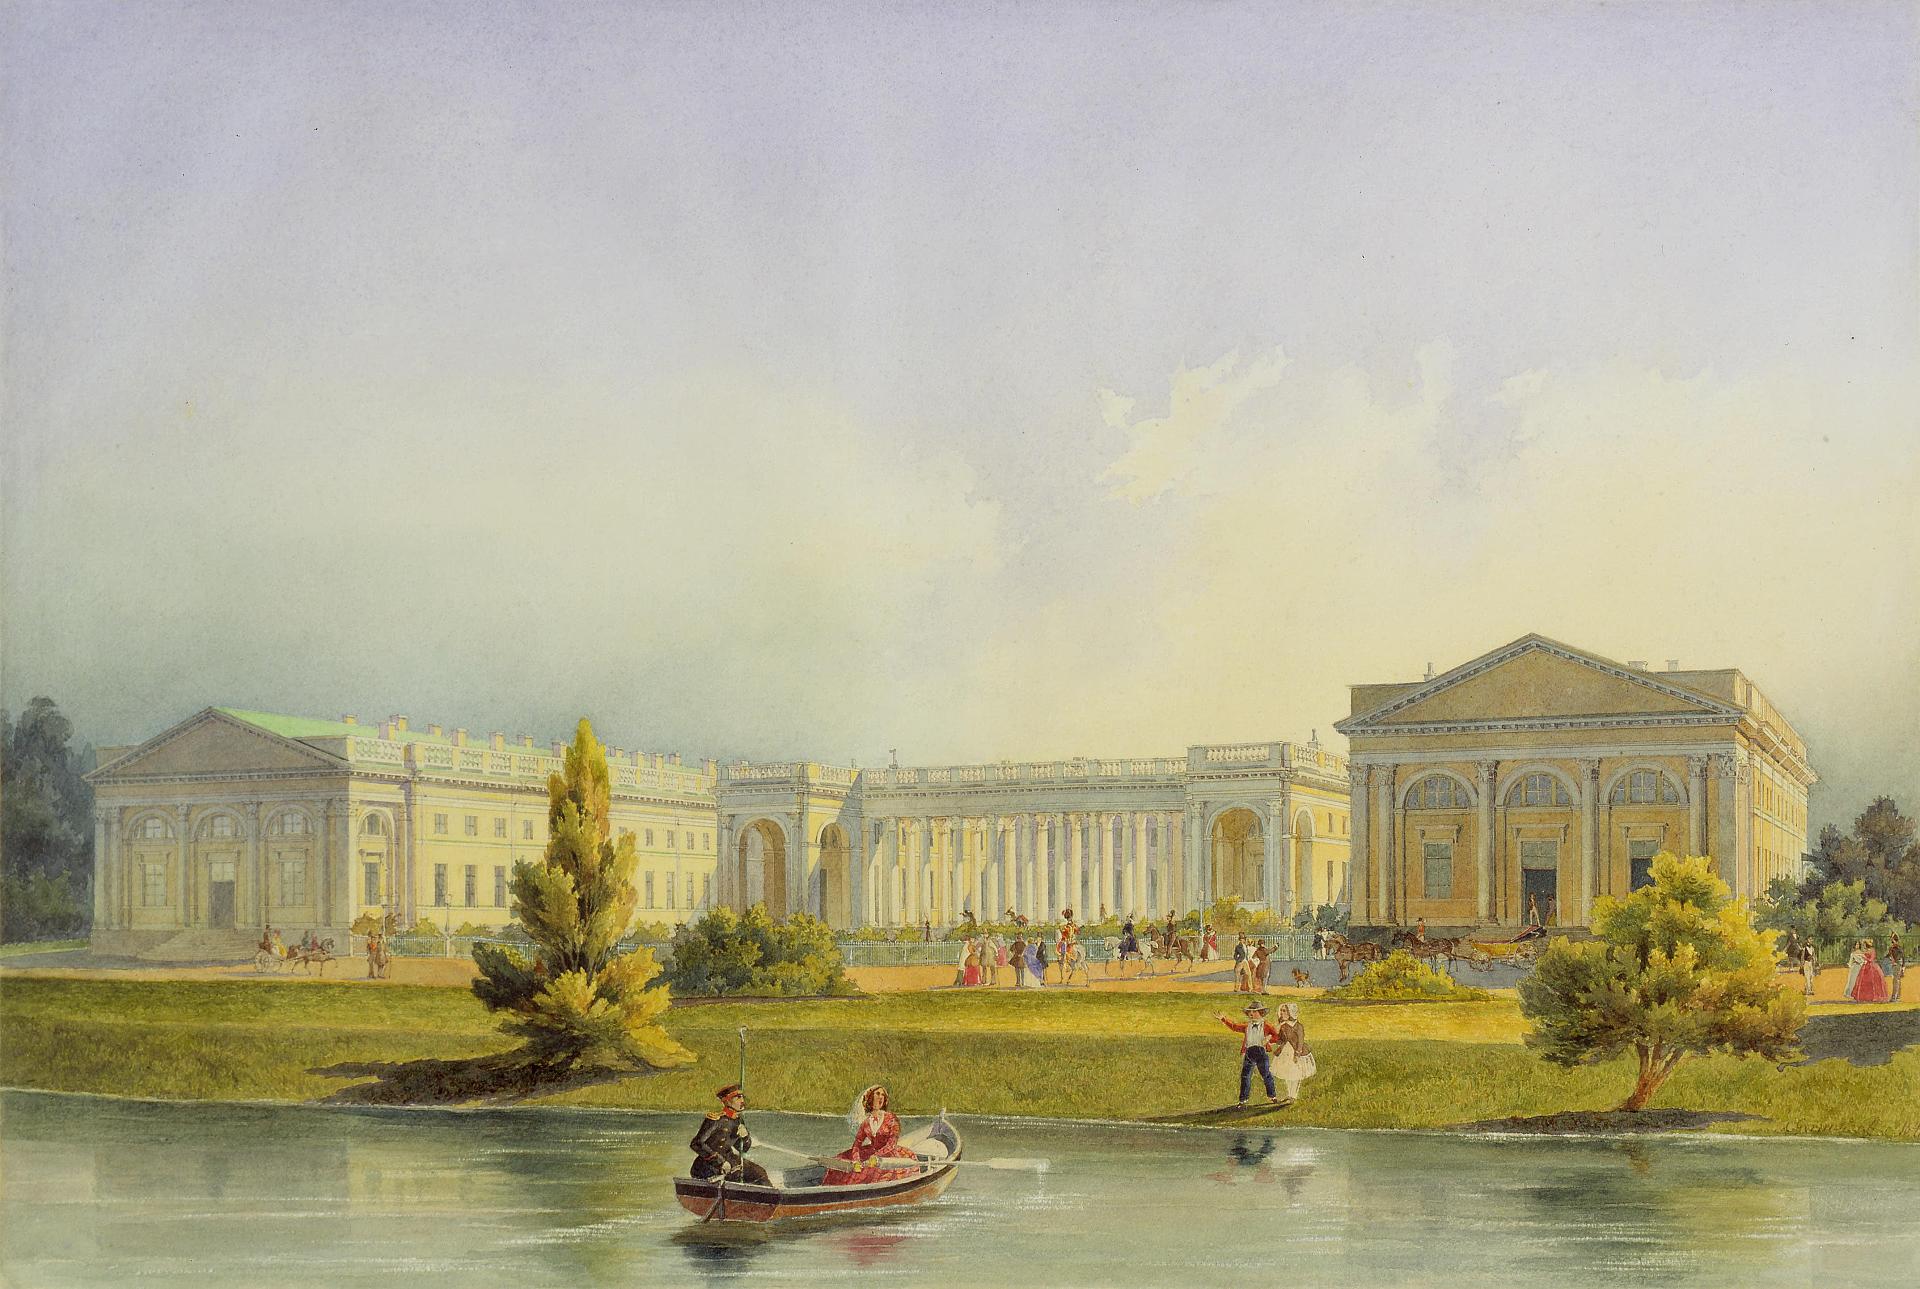 А. М. Горностаев. "Александровский дворец в Царском Селе". 1847.